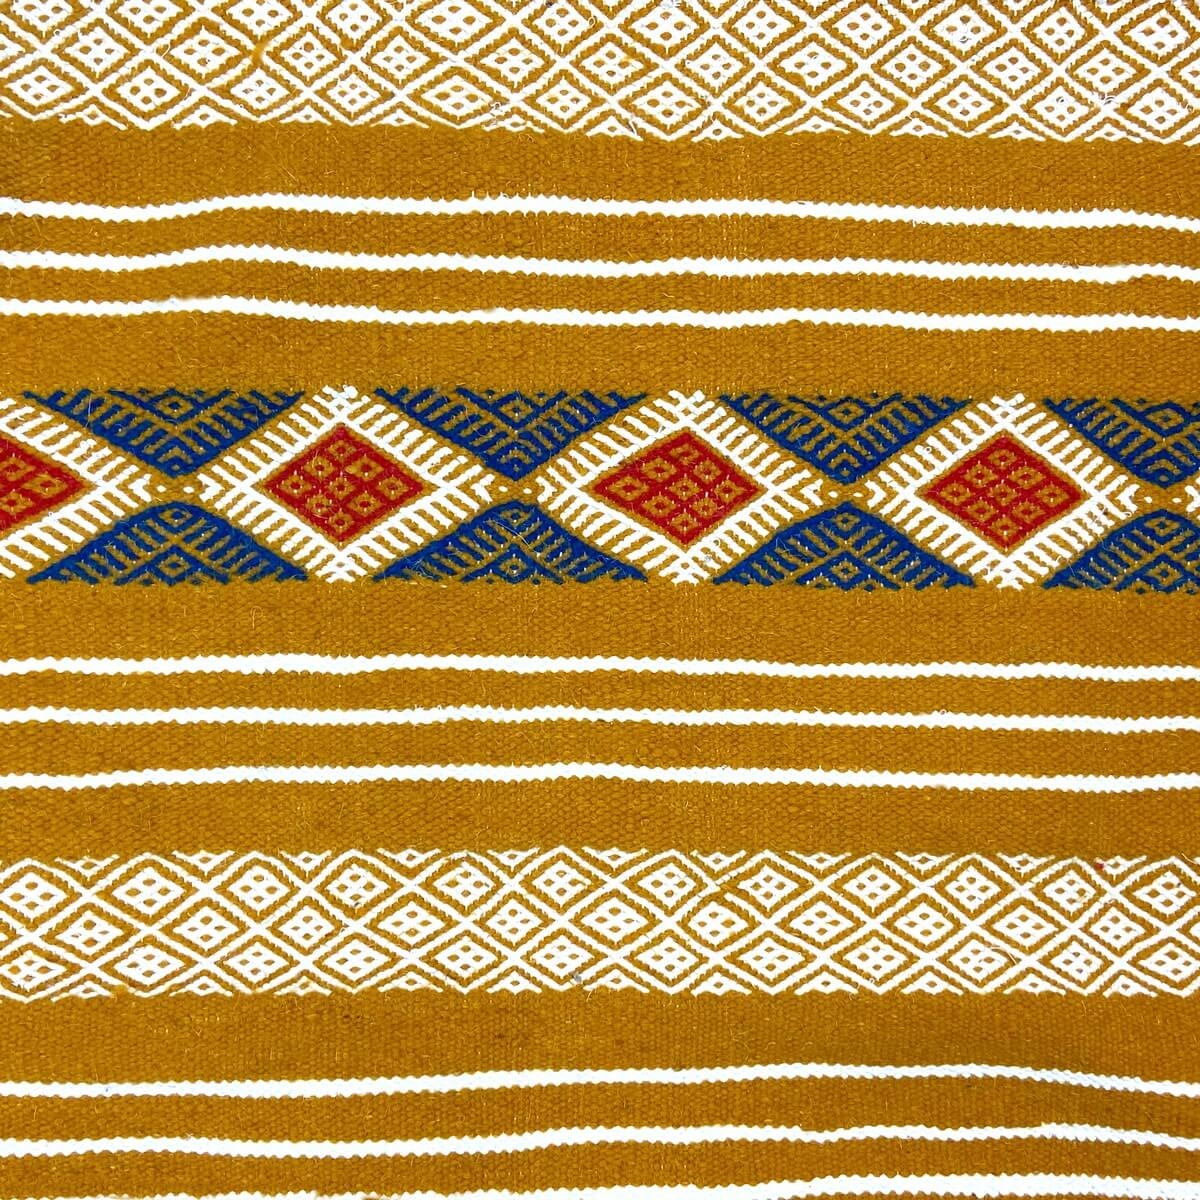 Berber tapijt Tapijt Kilim Kadey 123x196 Geel (Handgeweven, Wol, Tunesië) Tunesisch kilimdeken, Marokkaanse stijl. Rechthoekig w